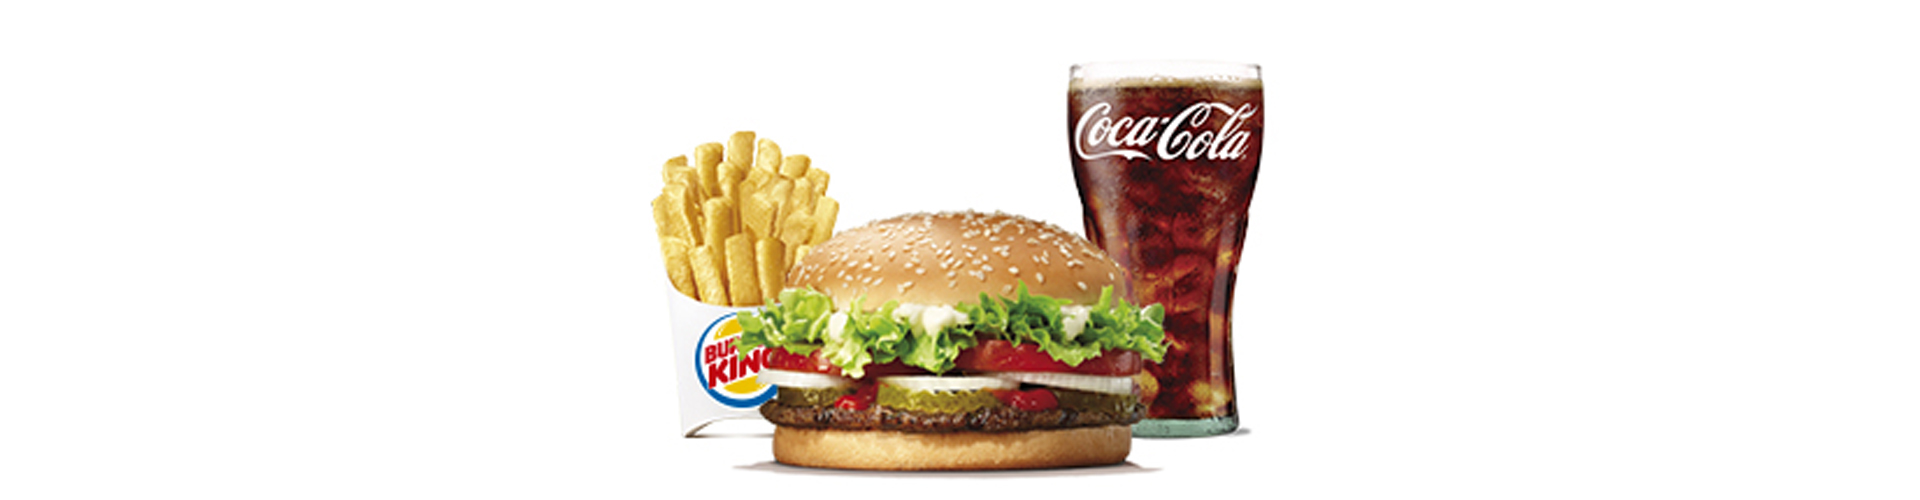 menu-whopper-burgerking-40001707-cocacola-zero-aros